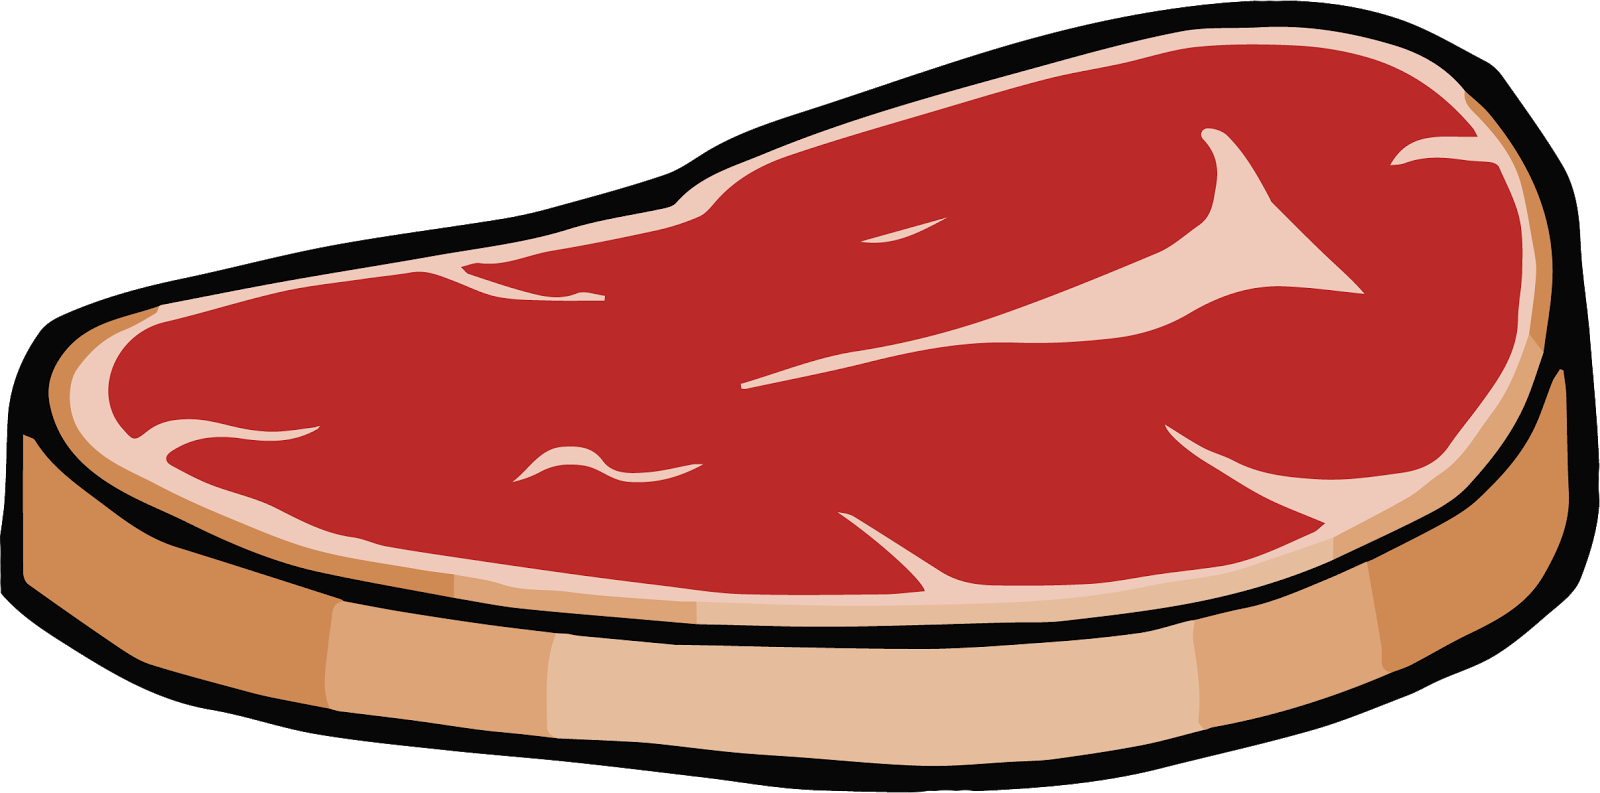 Meat Images Clip Art Imagebasket Net